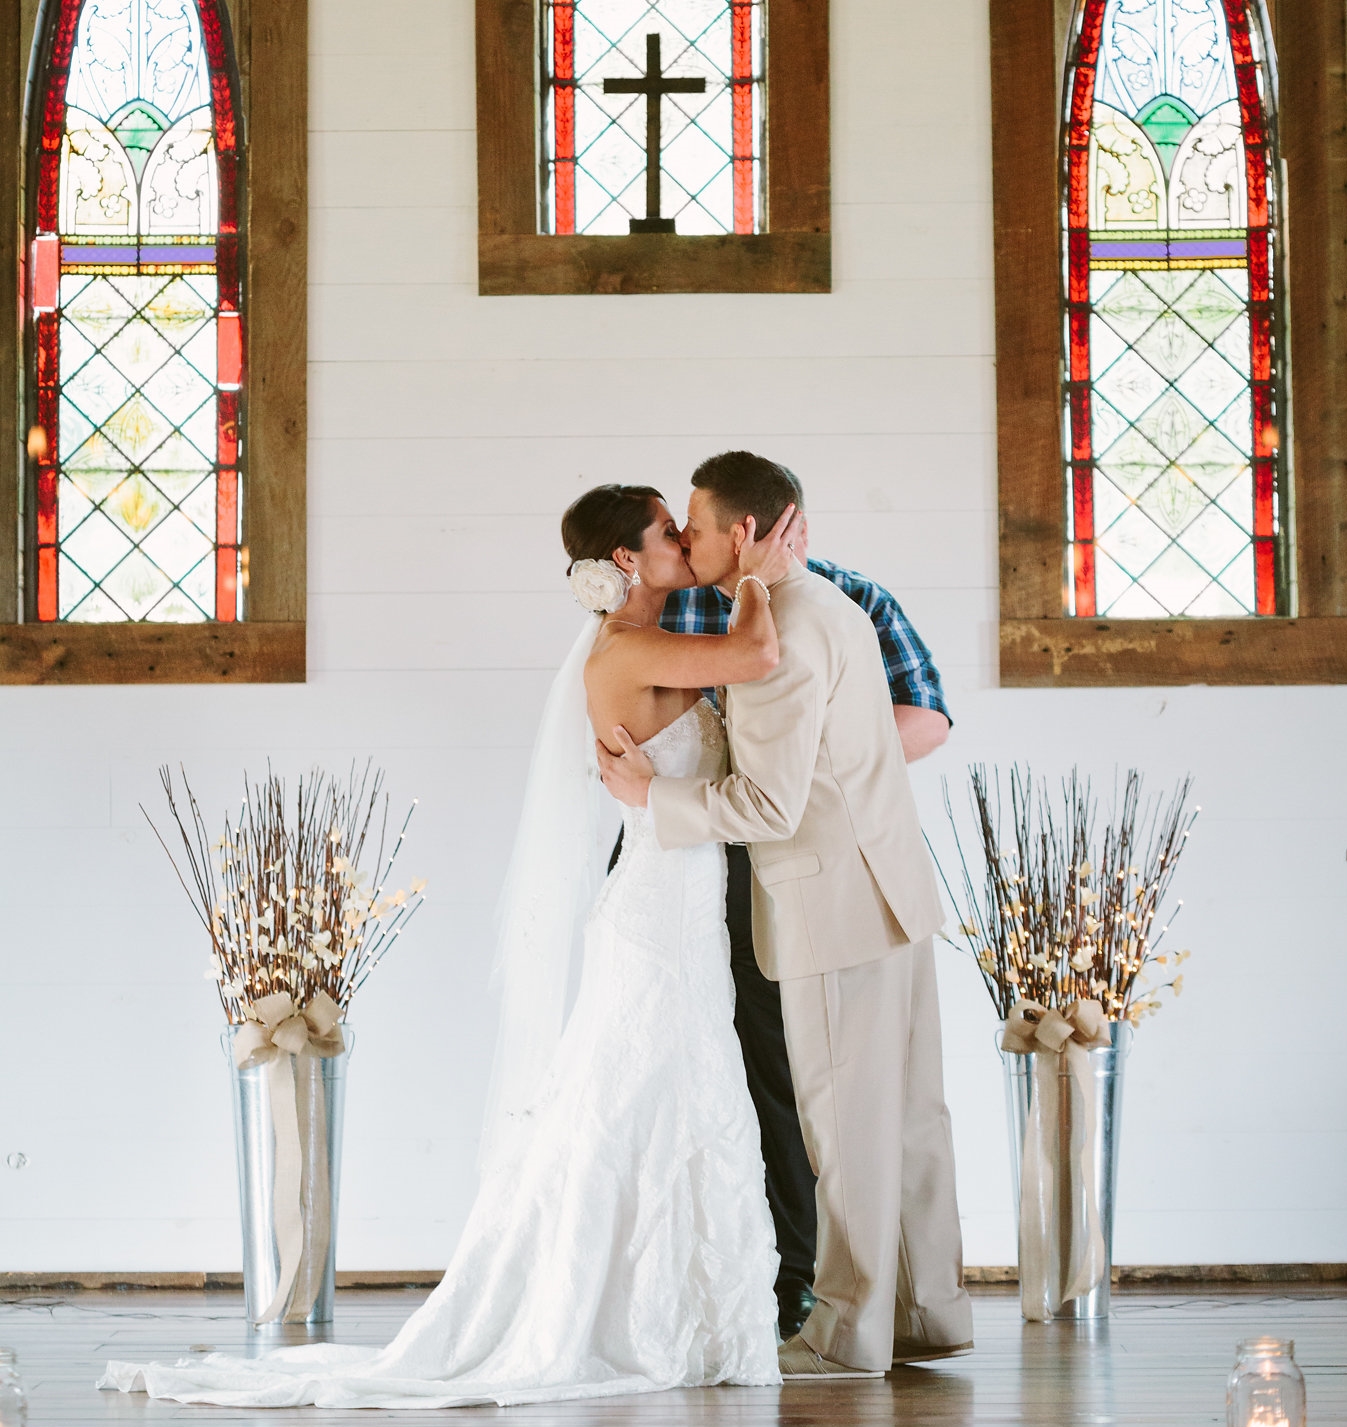 Hidden Acres Real Wedding | Meredith & Jason | Taken by Sarah Photography